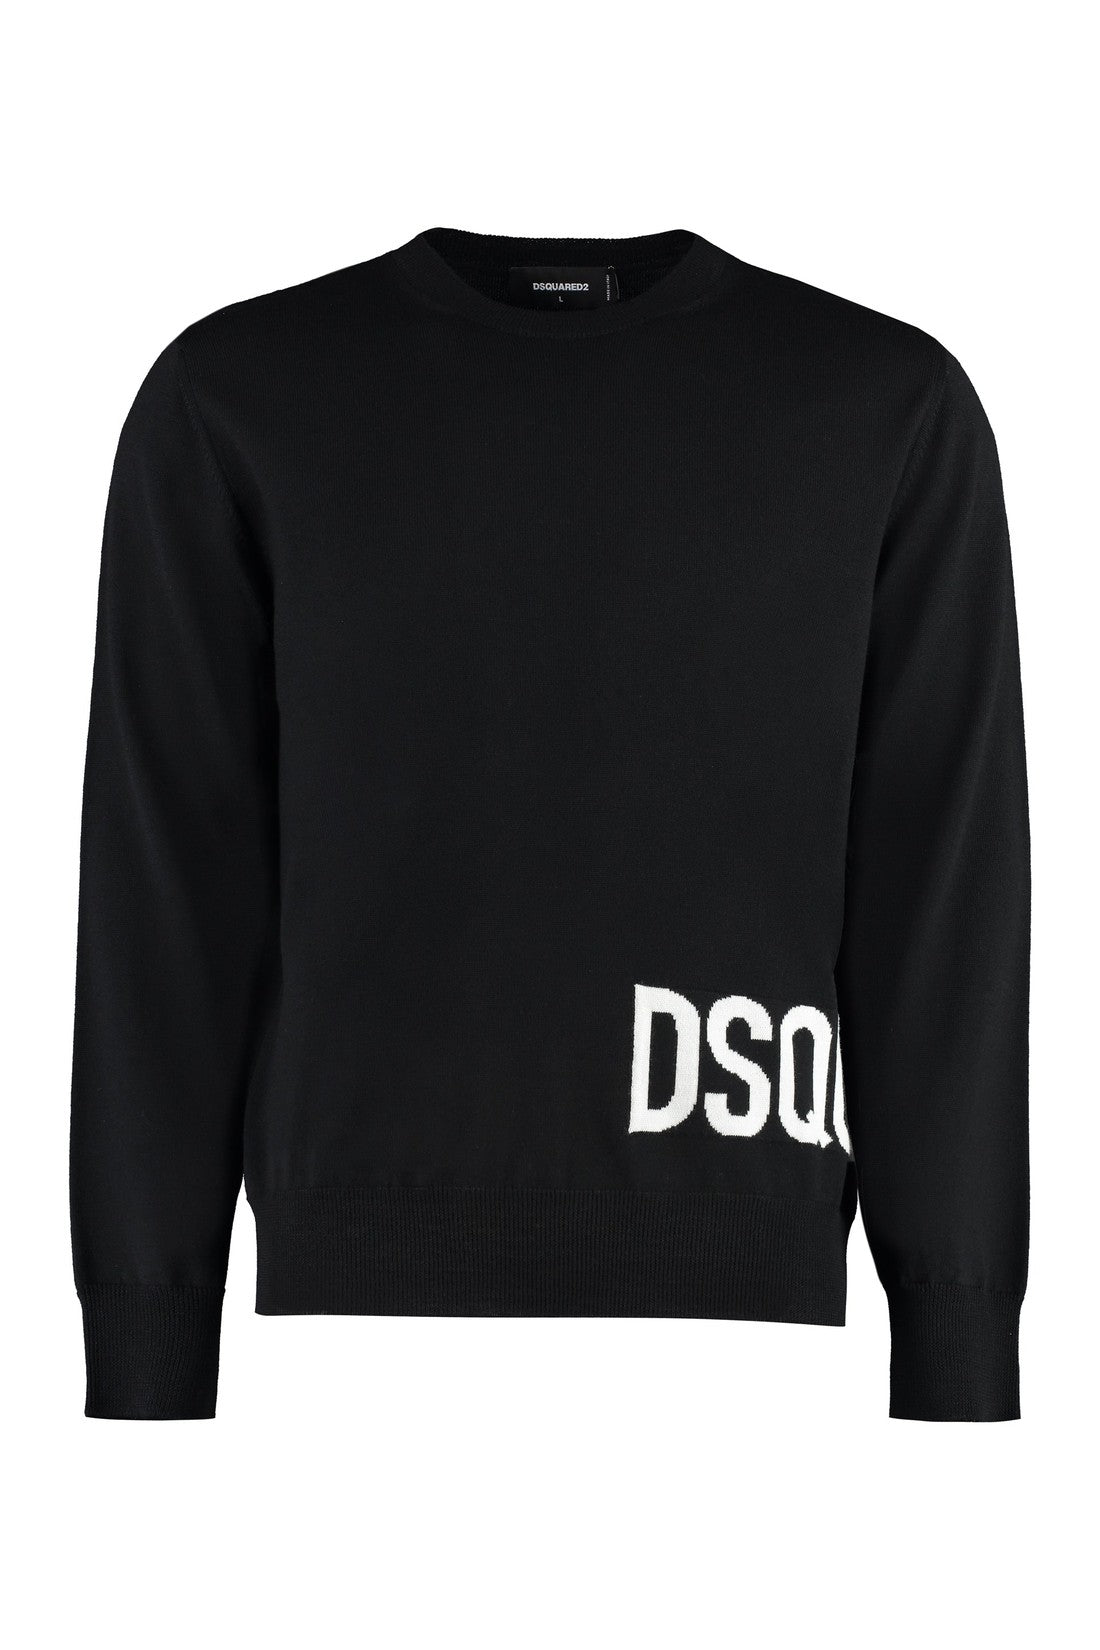 Dsquared2-OUTLET-SALE-DSQ2 virgin wool crew-neck sweater-ARCHIVIST